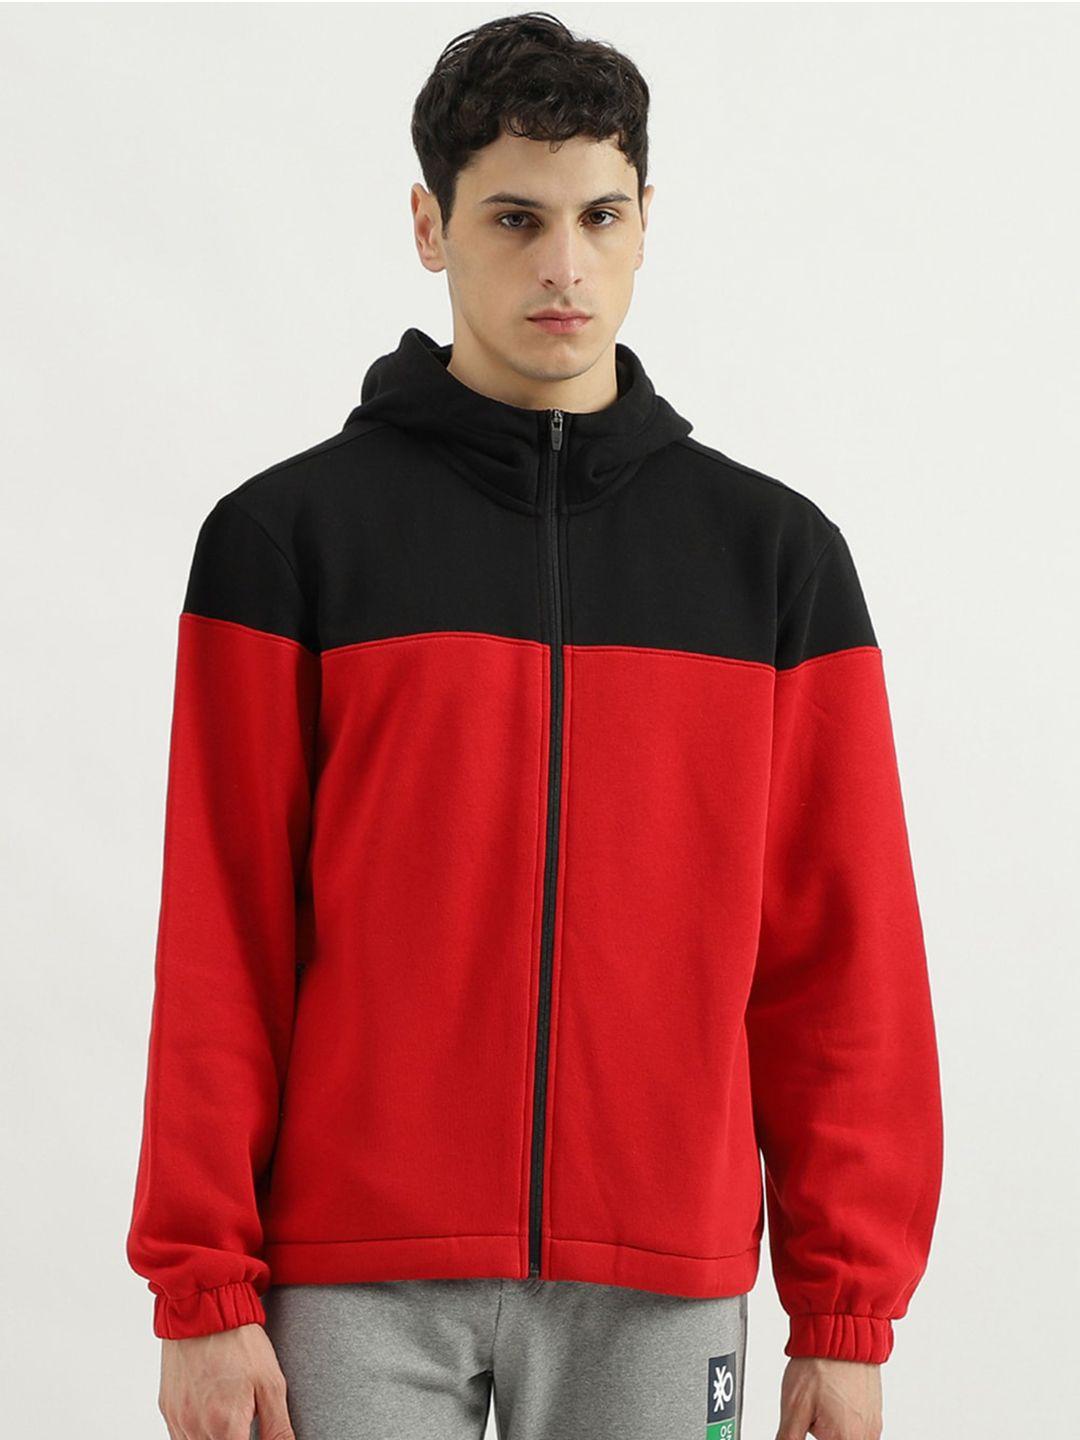 united-colors-of-benetton-colourblocked-hooded-front-open-sweatshirt